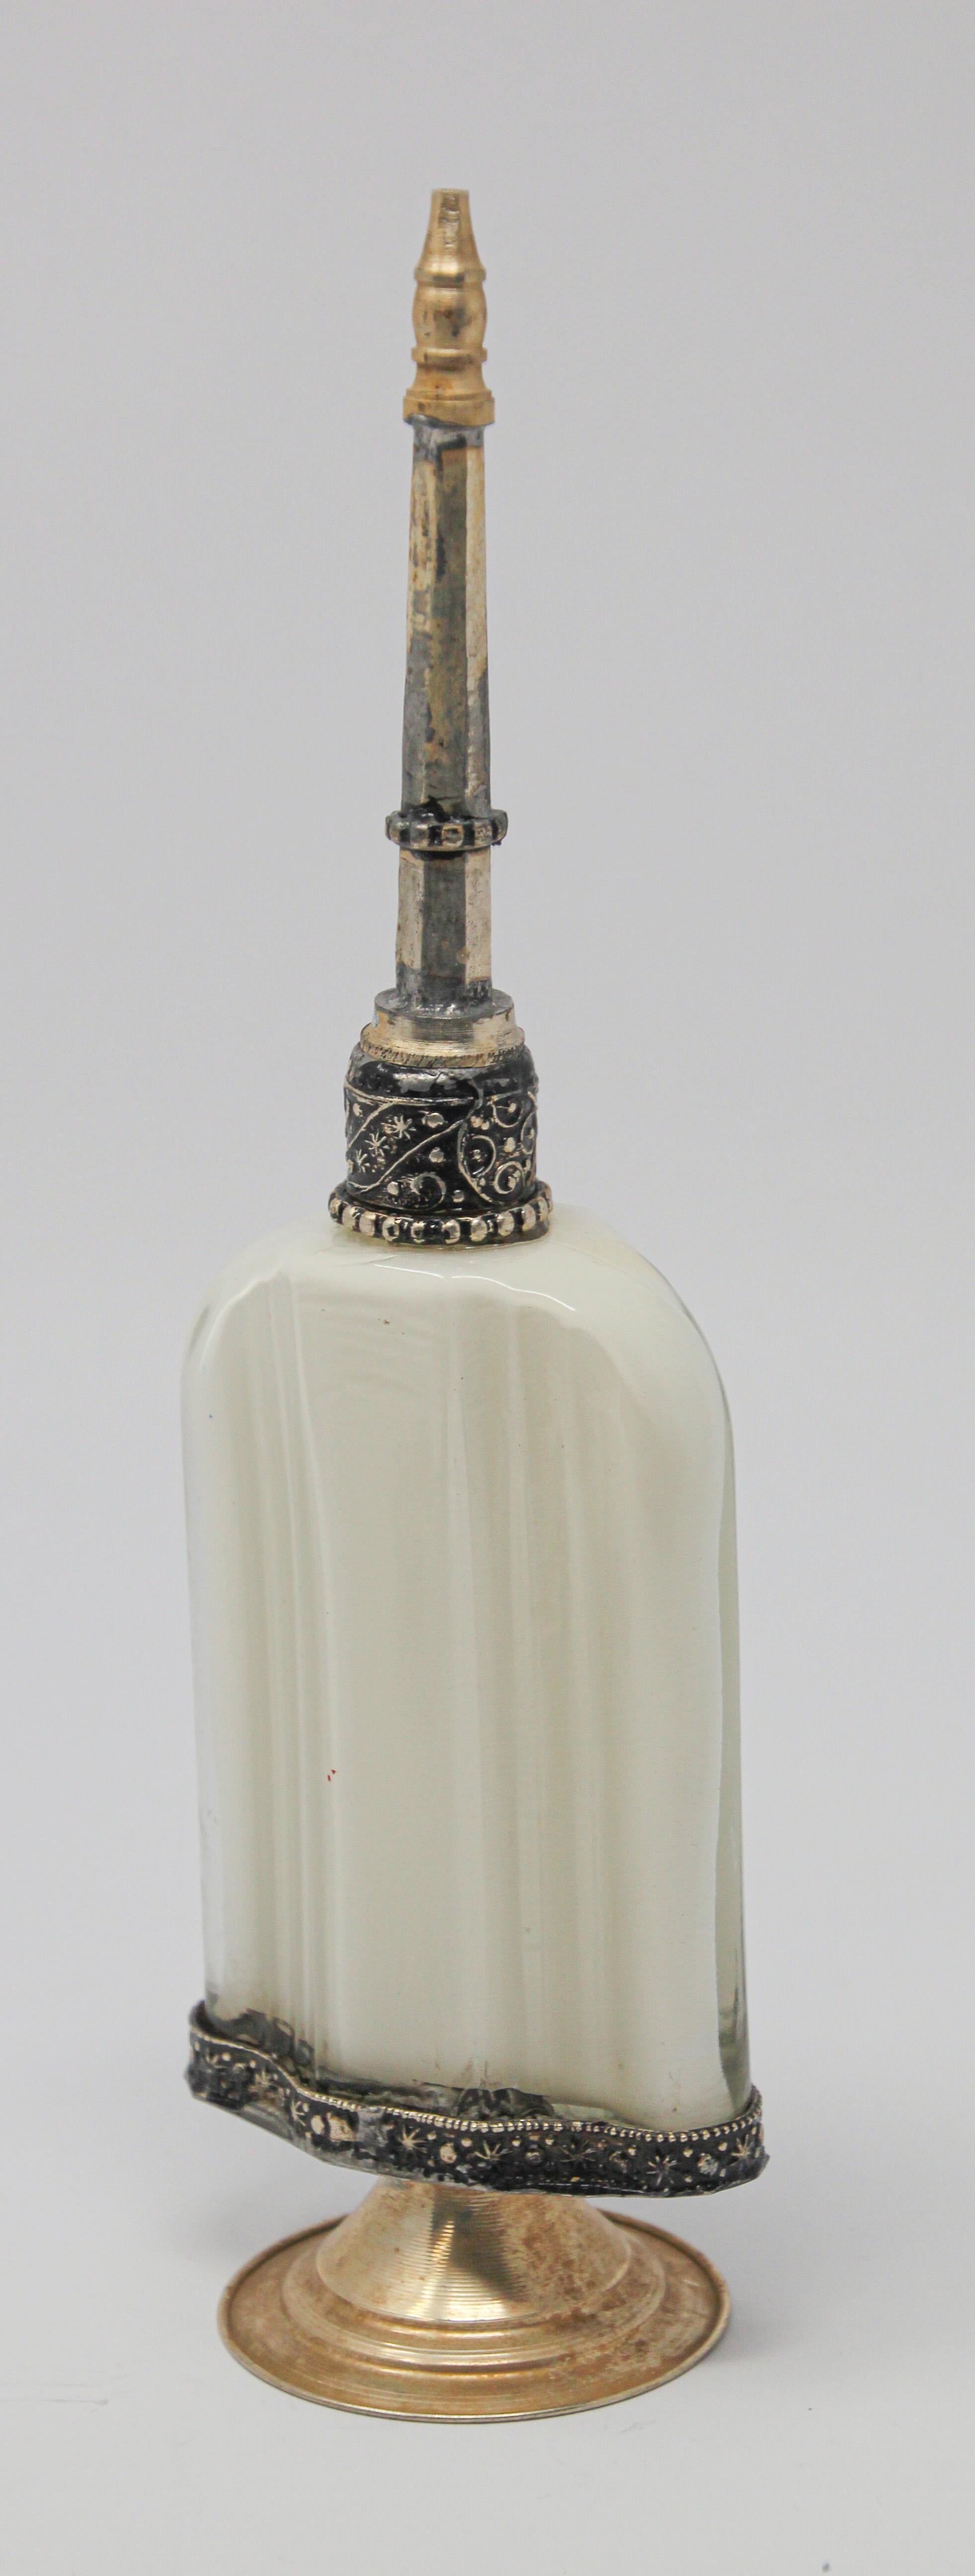 Moroccan Moorish Decorative Glass Perfume Bottle Sprinkler with Embossed Metal Overlay